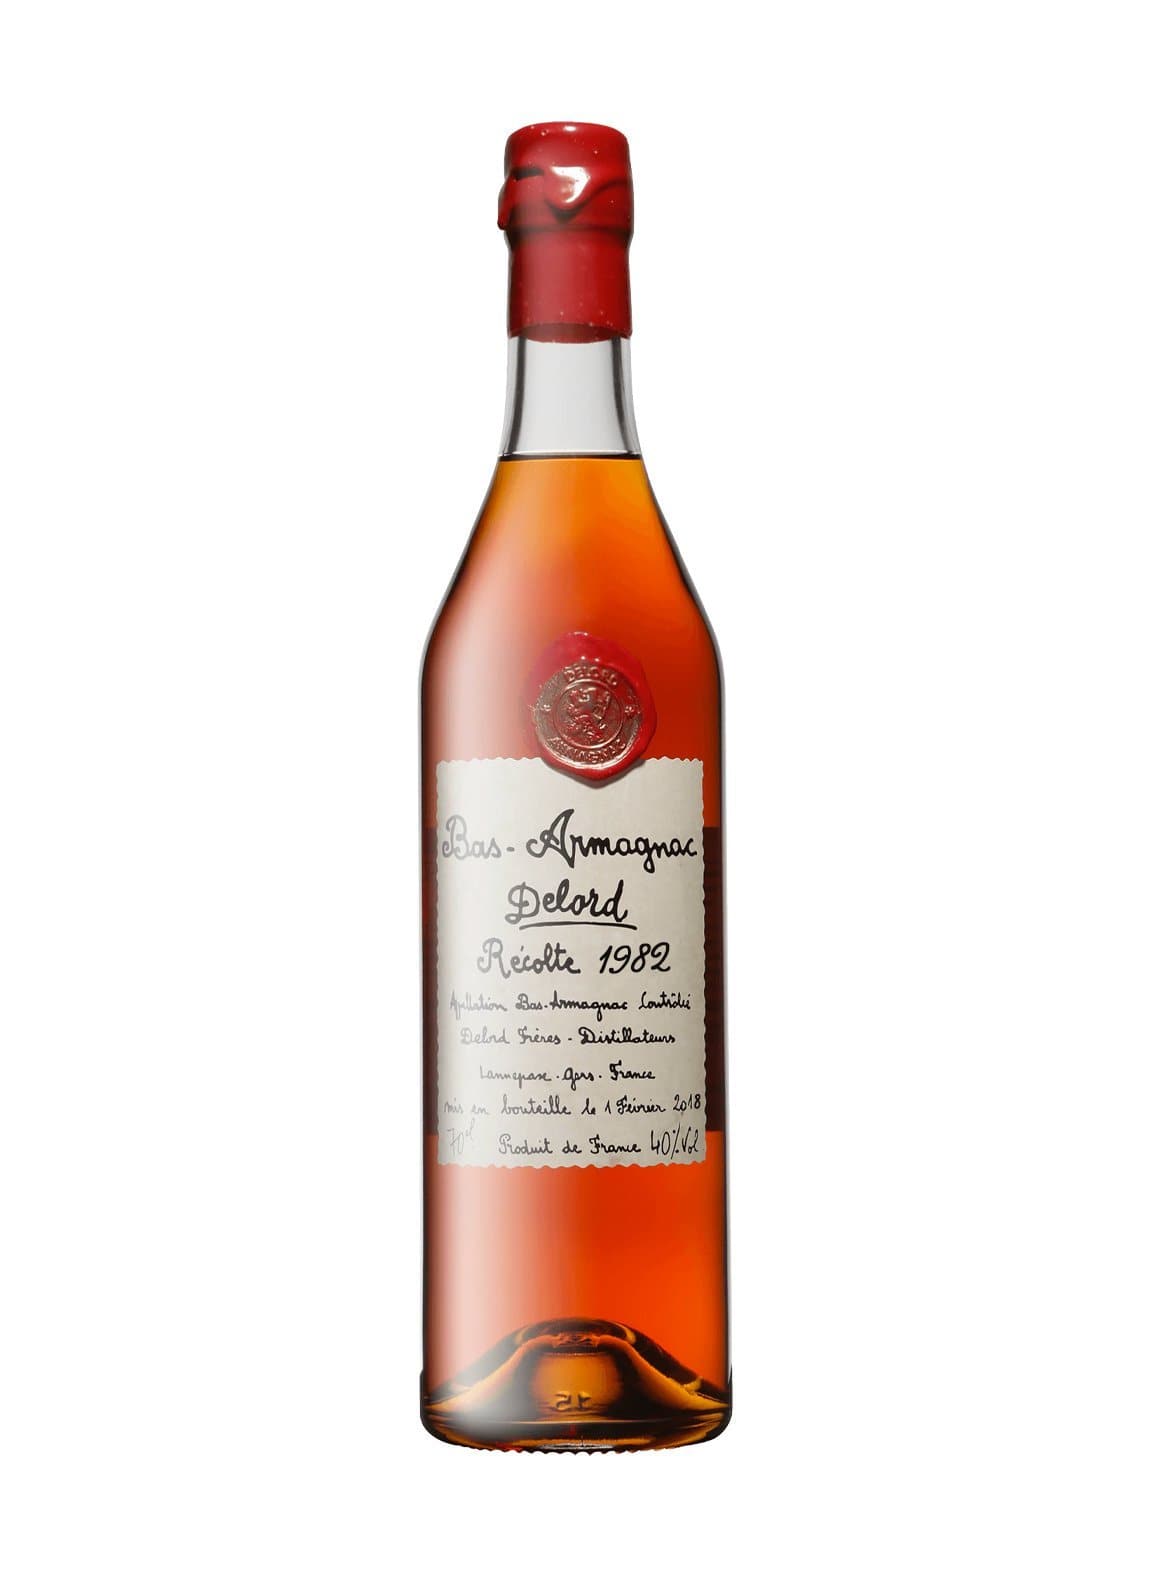 Delord 1982 Bas Armagnac 40% 700ml | Brandy | Shop online at Spirits of France